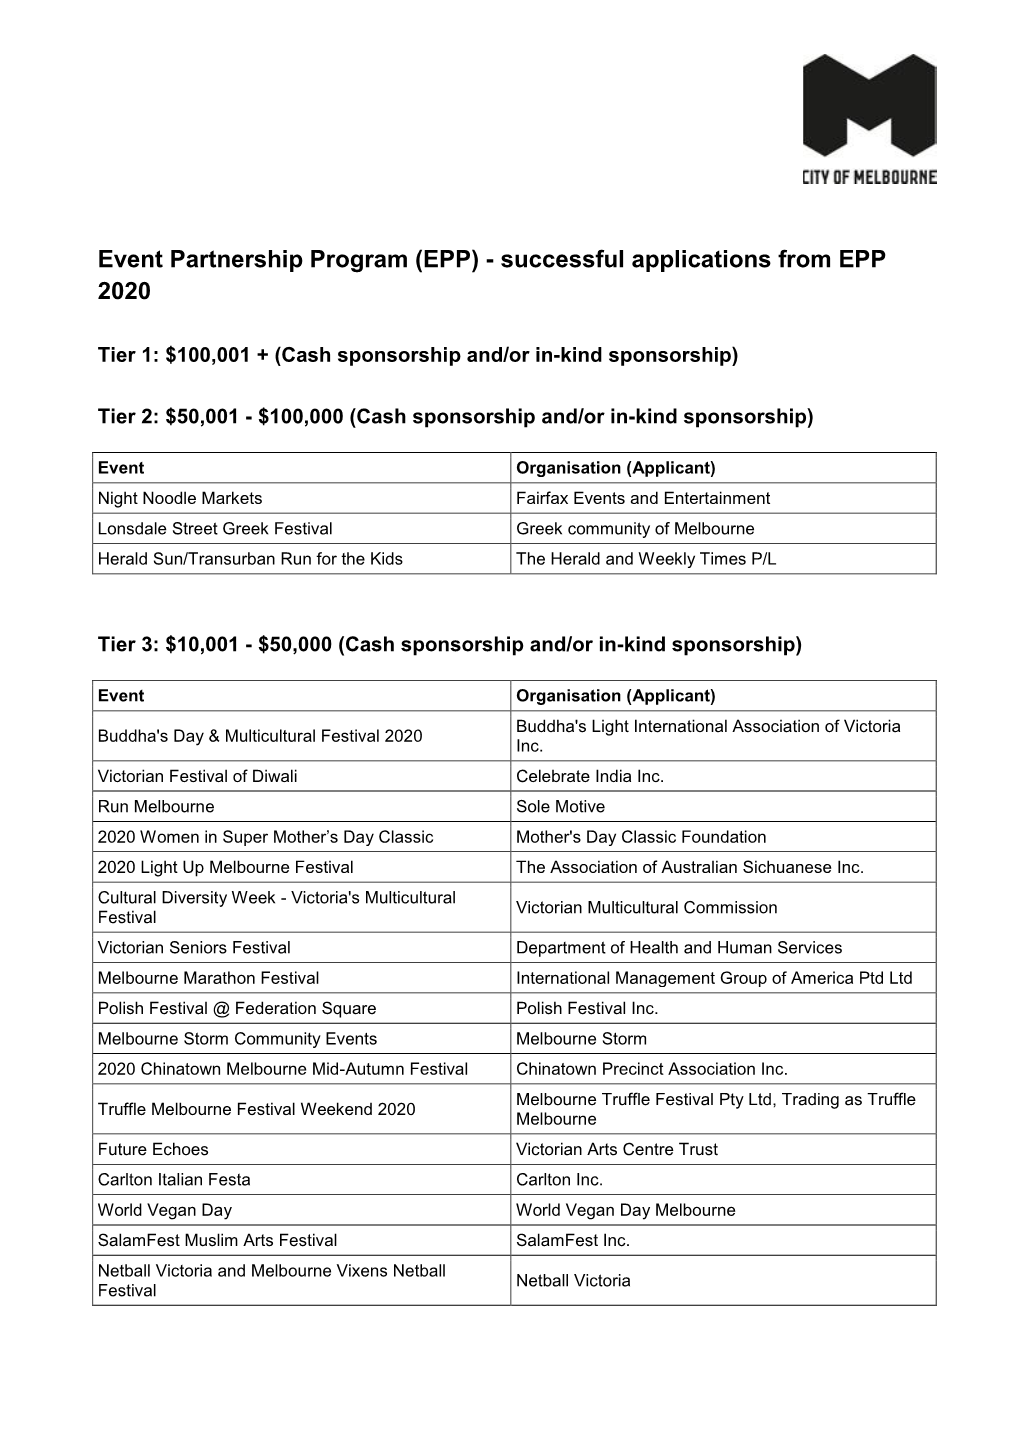 Event Partnership Program (EPP) - Successful Applications from EPP 2020